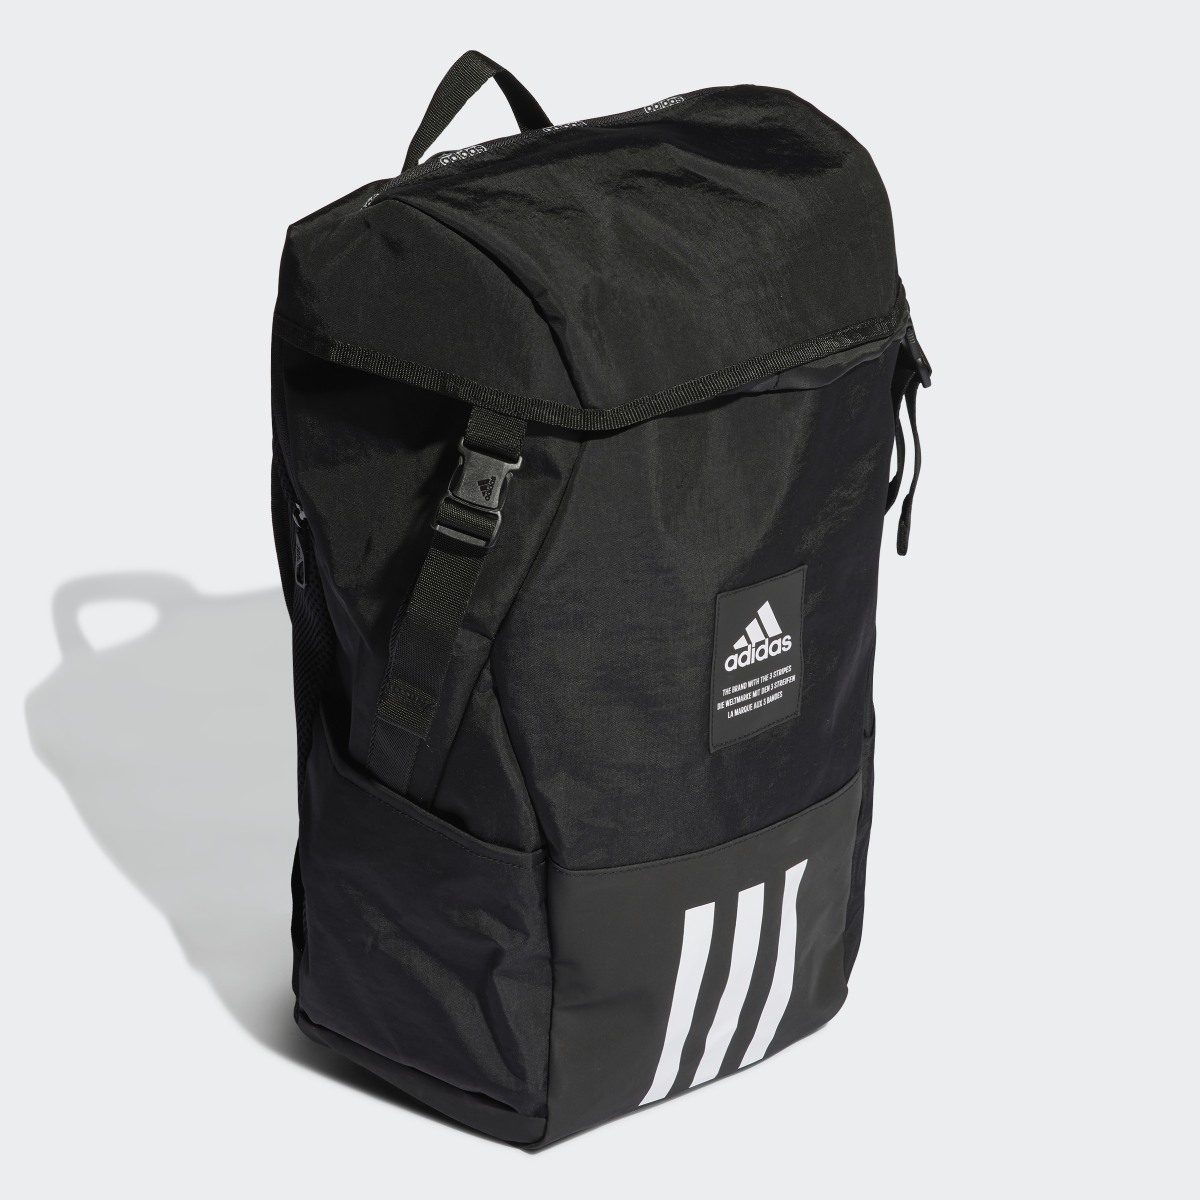 Adidas 4ATHLTS Training Backpack. 4